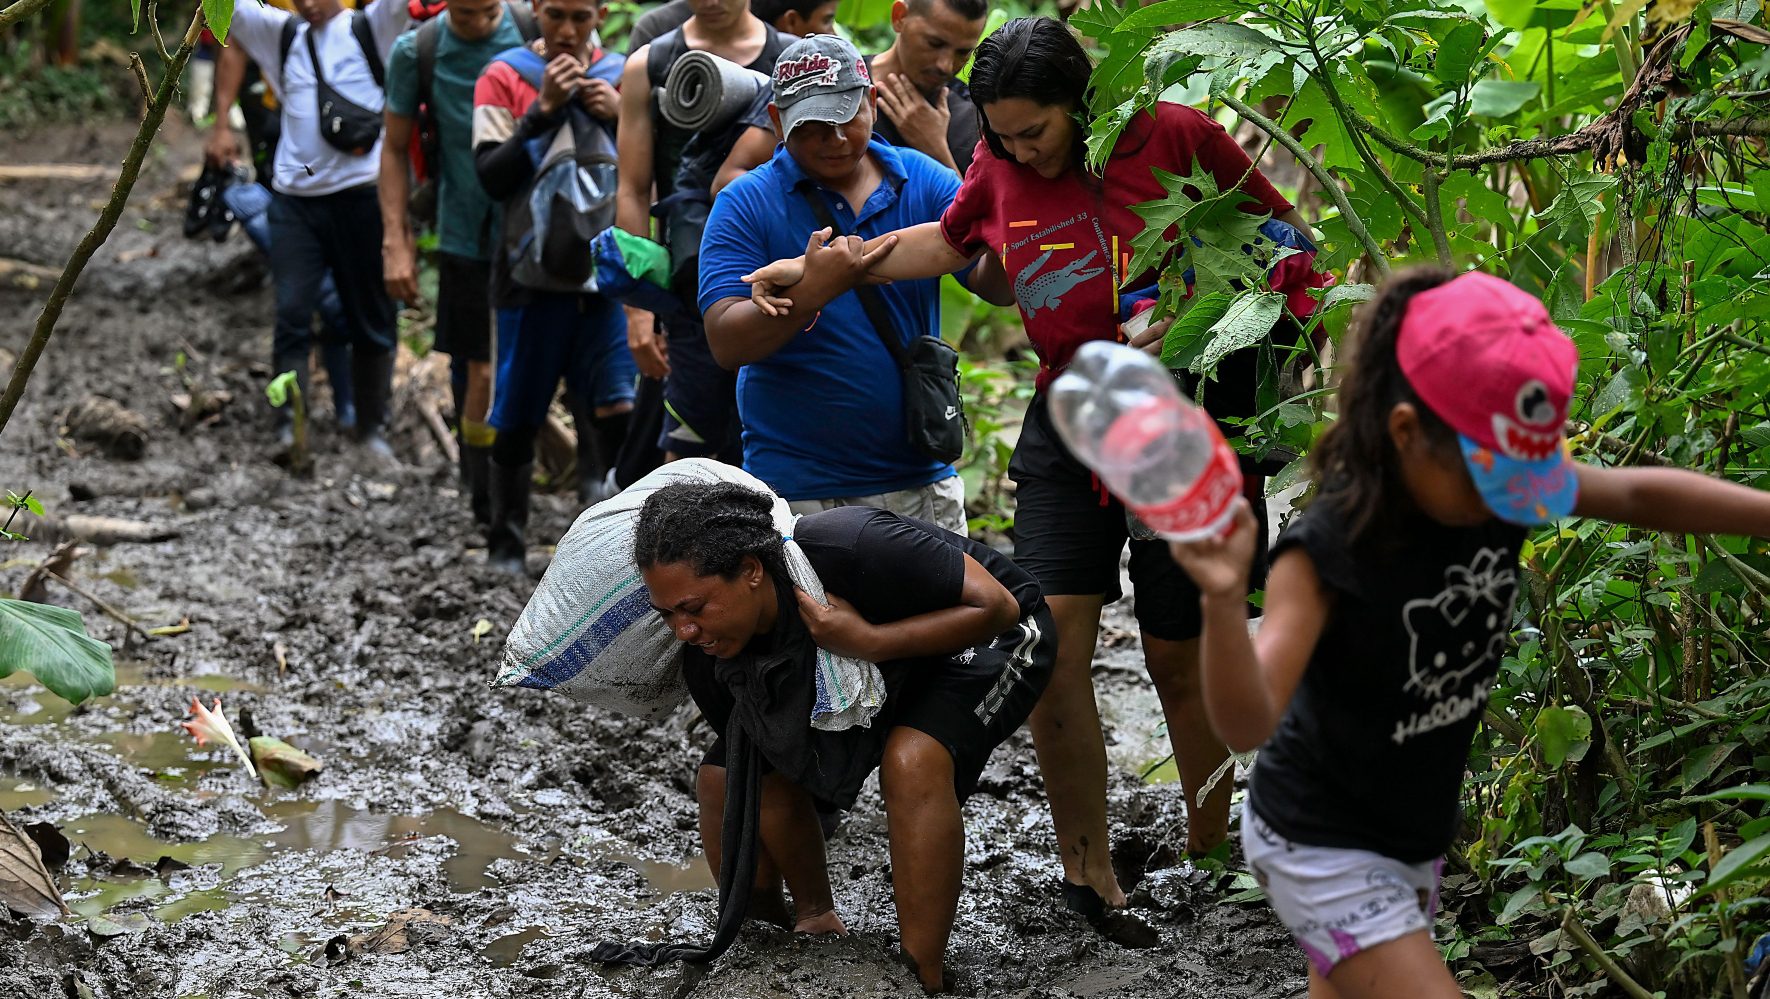 Migrants walk through the mud in the Darien Gap.